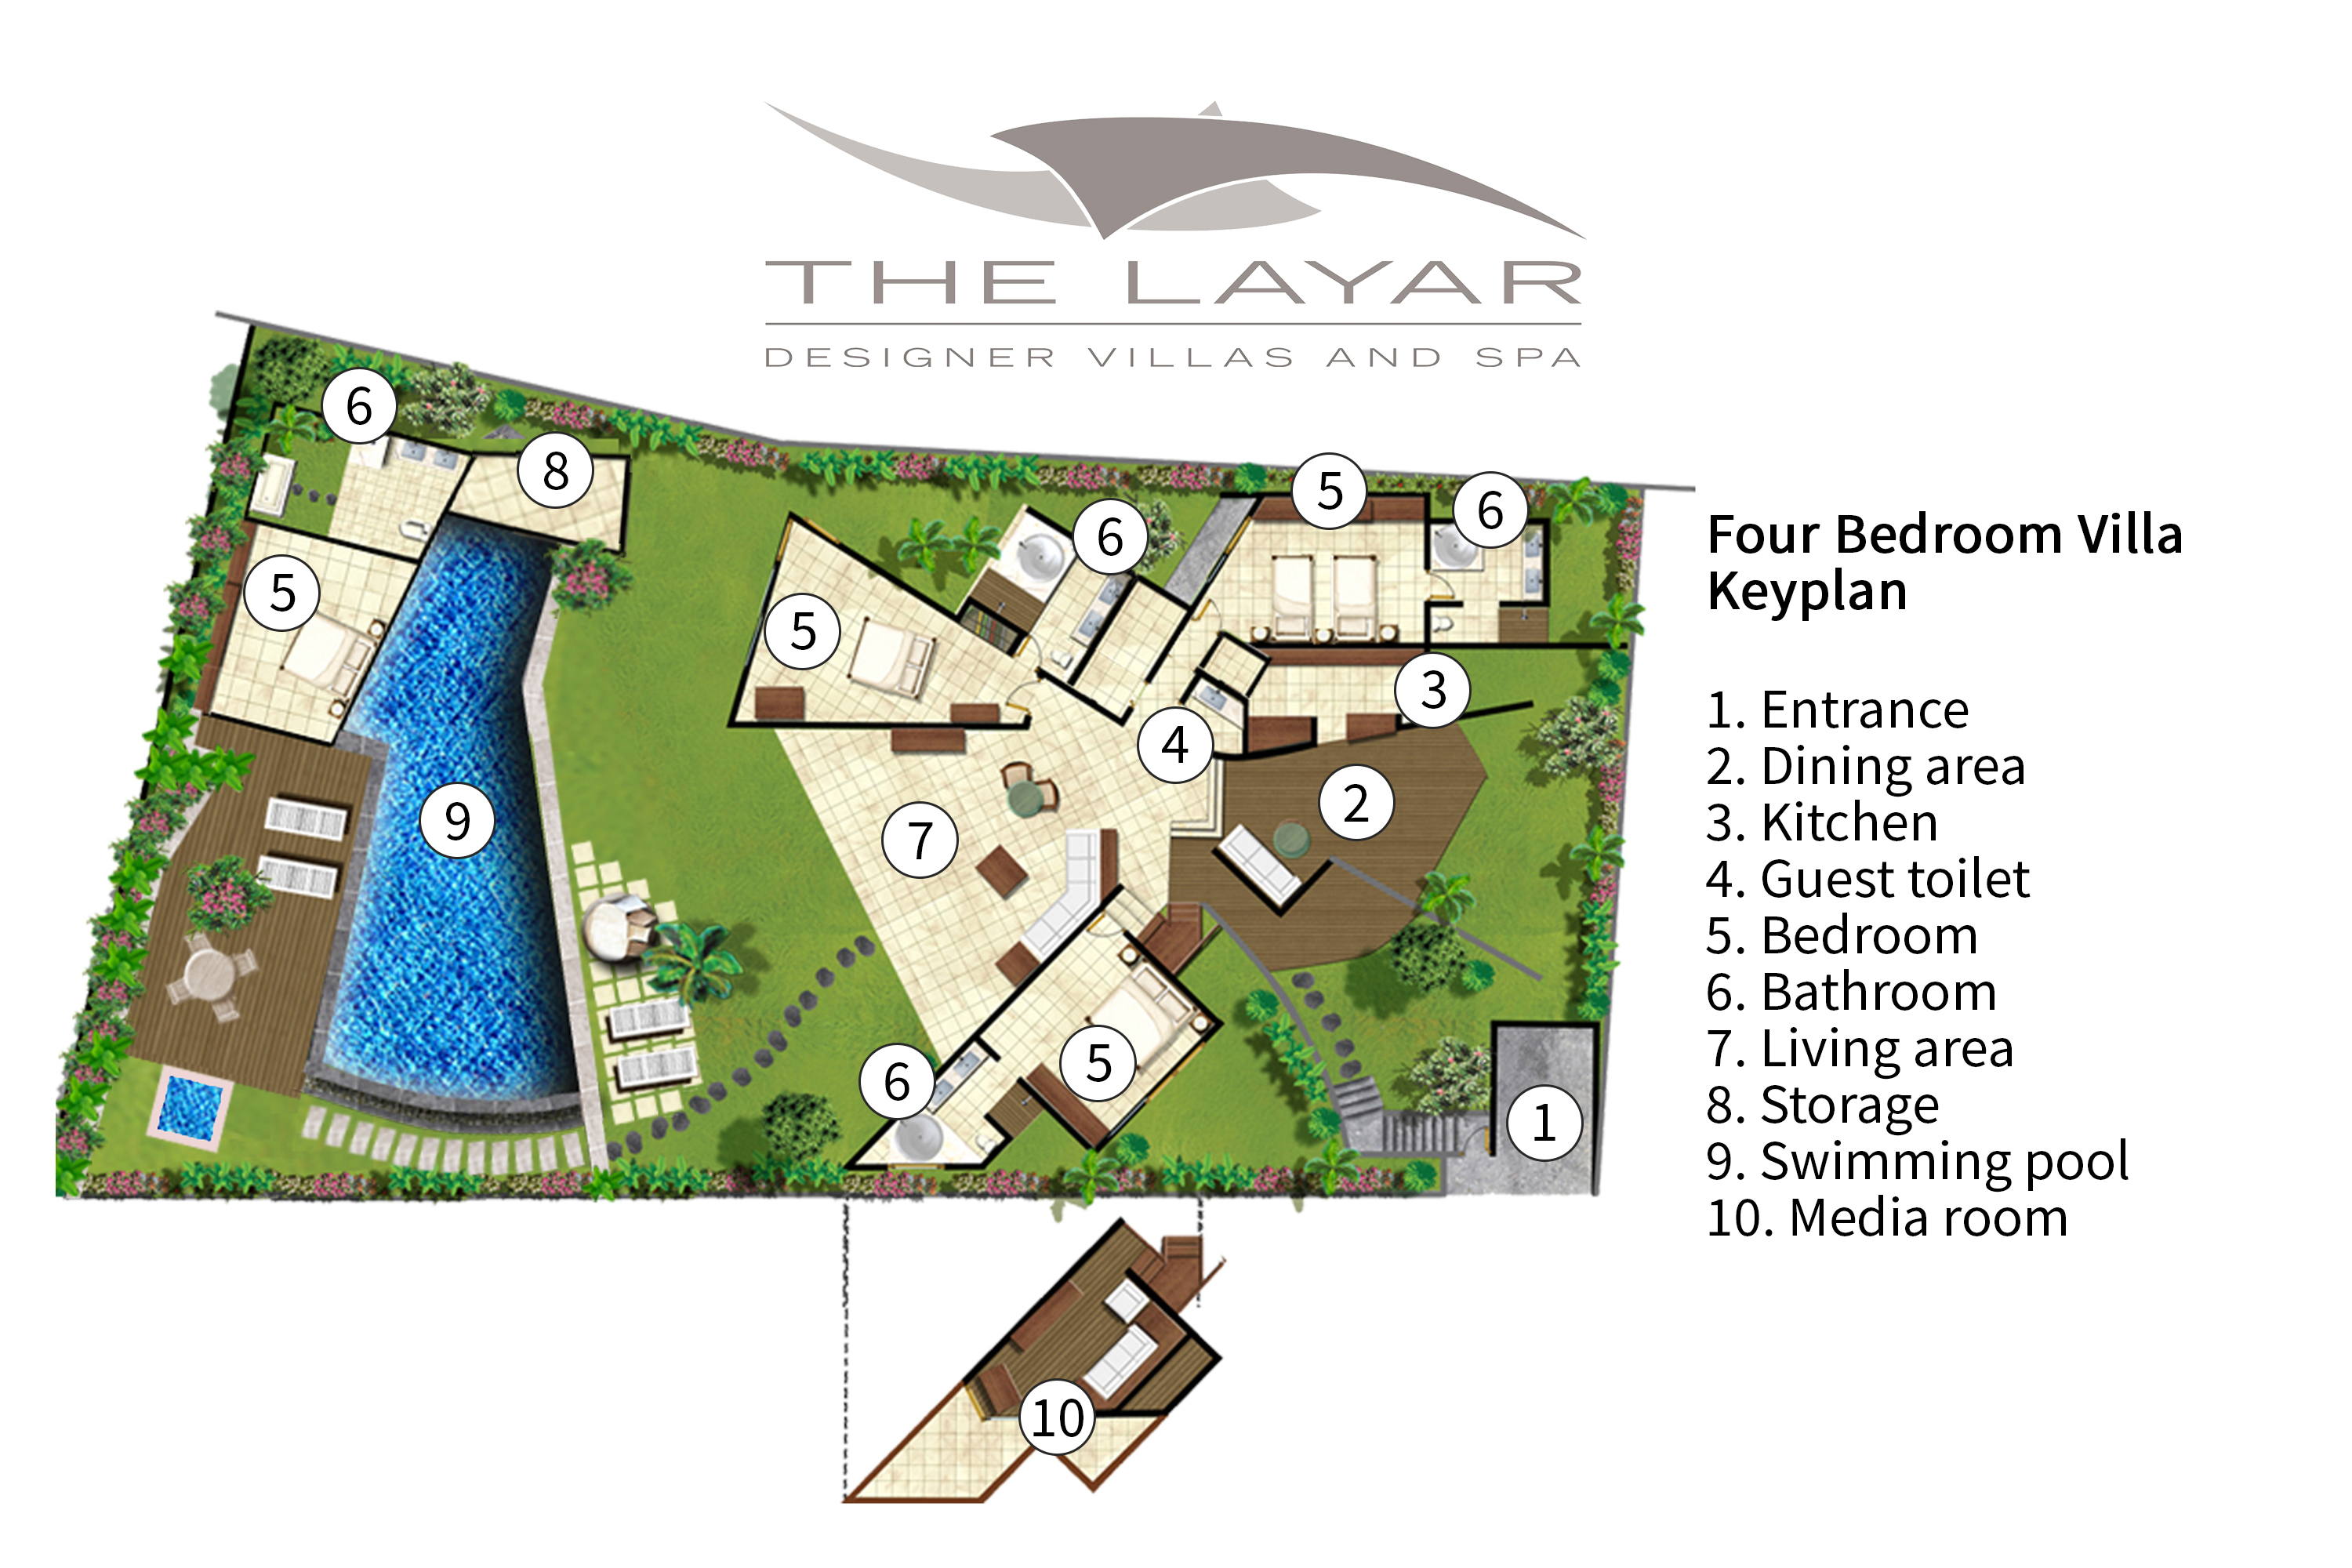 The Layar - four bedroom villa